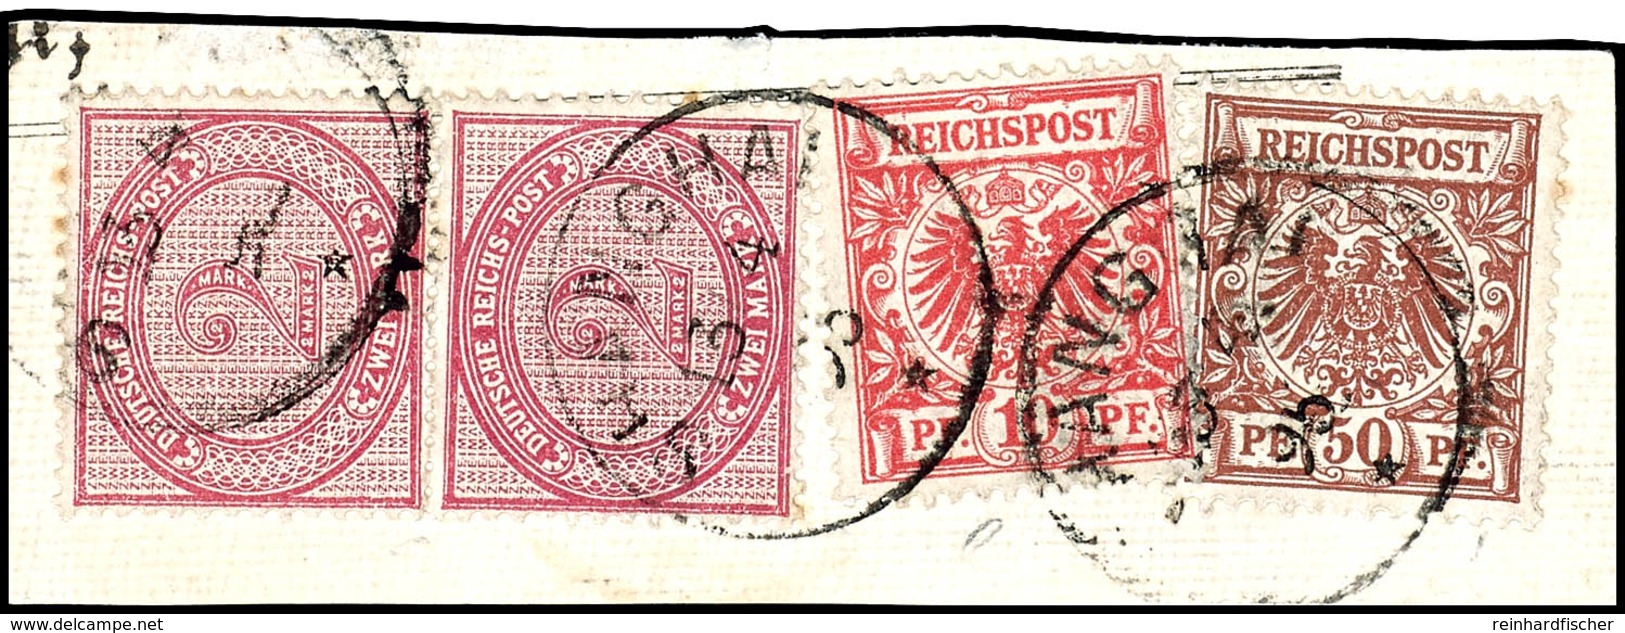 10 Pfennig, 50 Pfennig, 2 Mark 2 Werte, Kabinettbriefstück, Michel 400,-, Katalog: V47cV50c,V37 BS - China (offices)